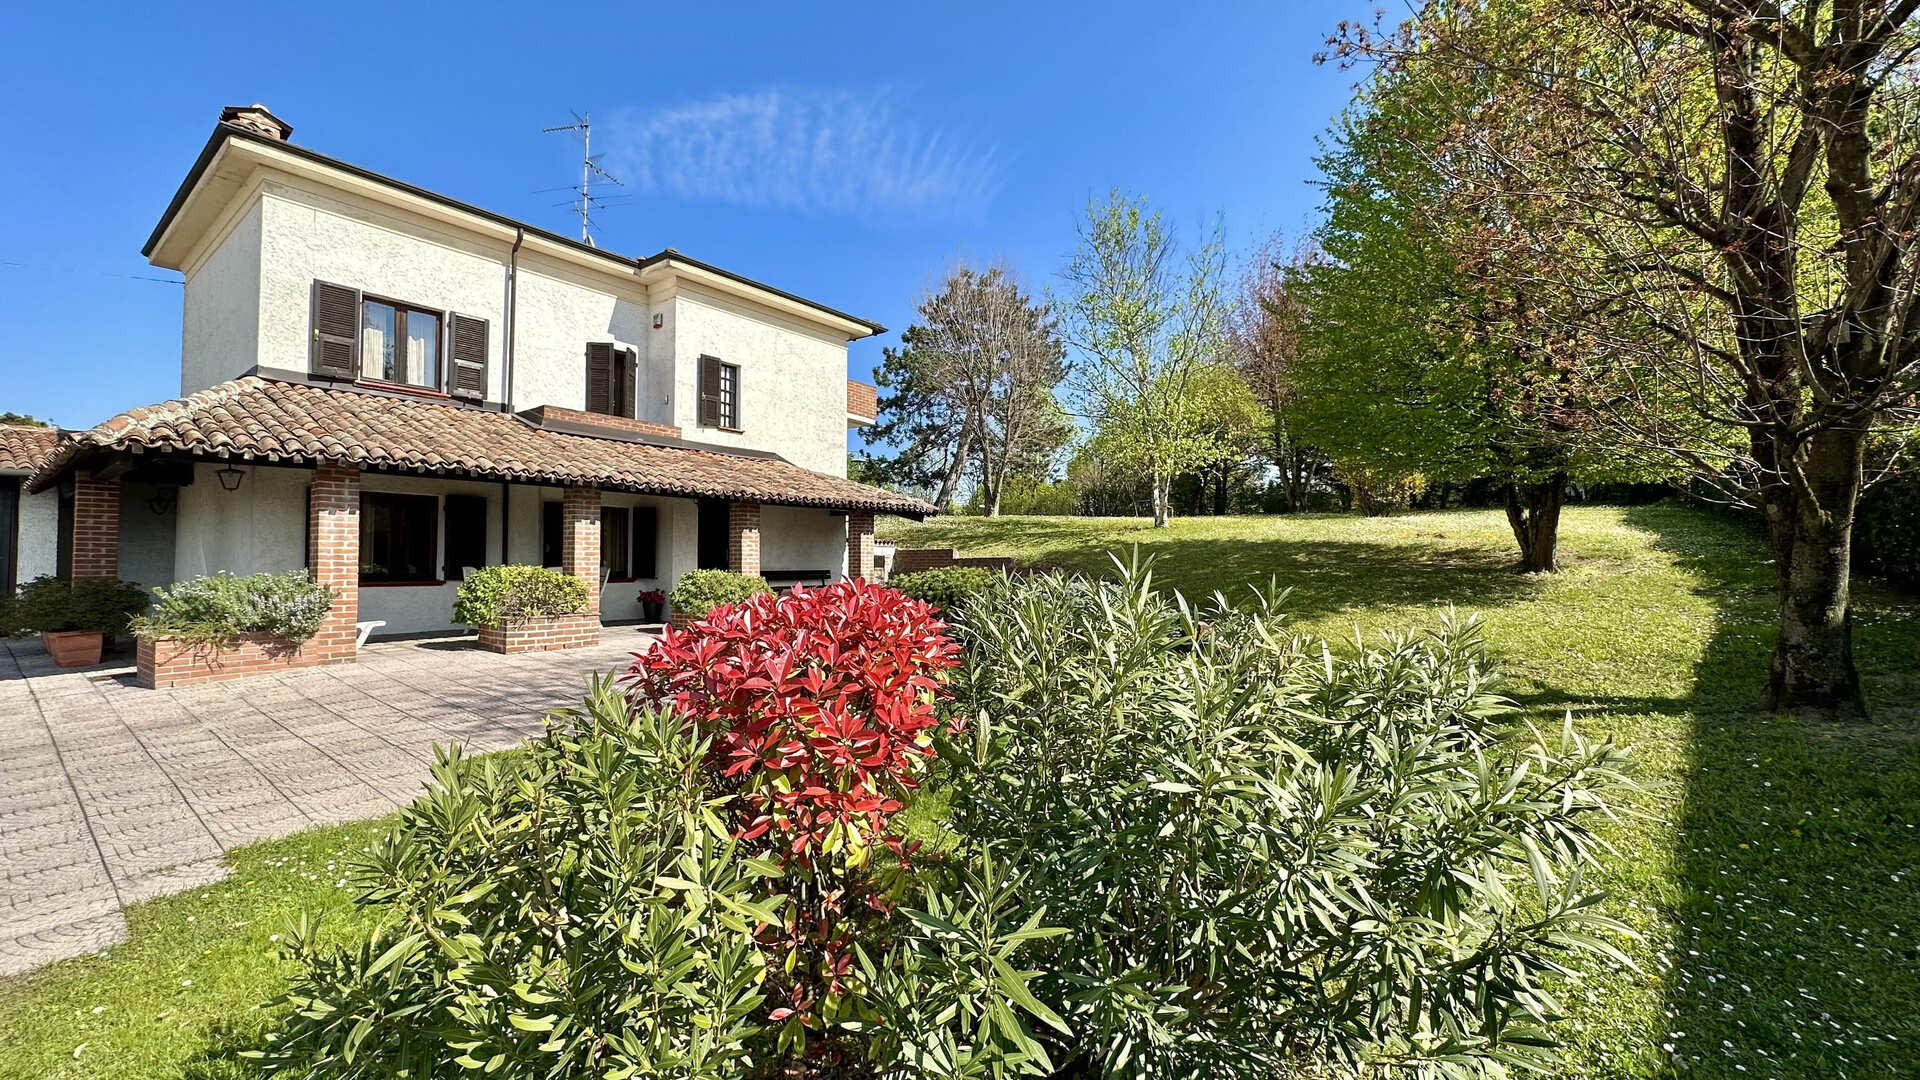 Se vende villa in zona tranquila Tortona Piemonte